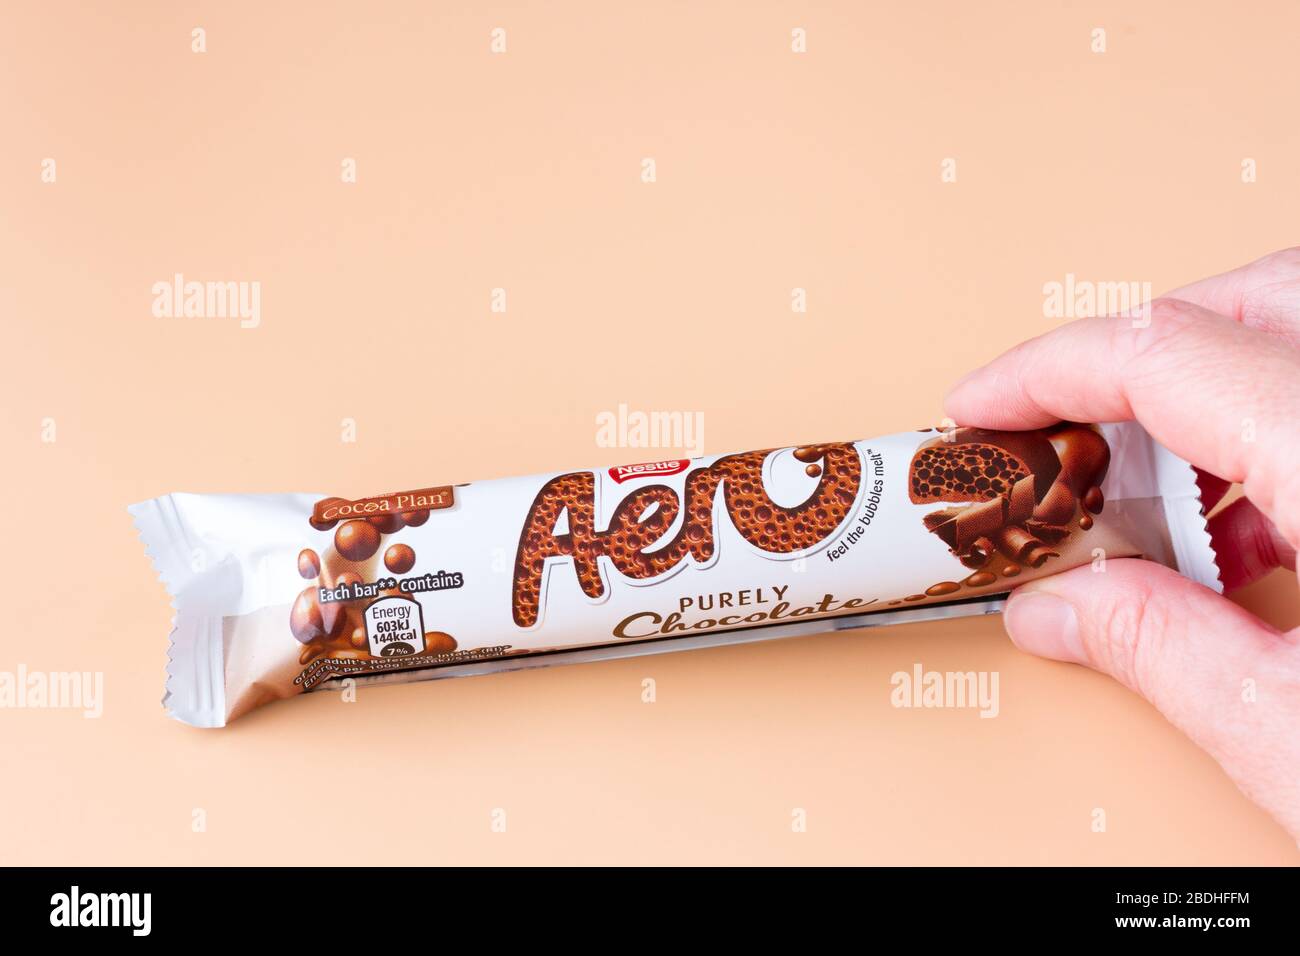 Aero wrapped chocolate bar Stock Photo